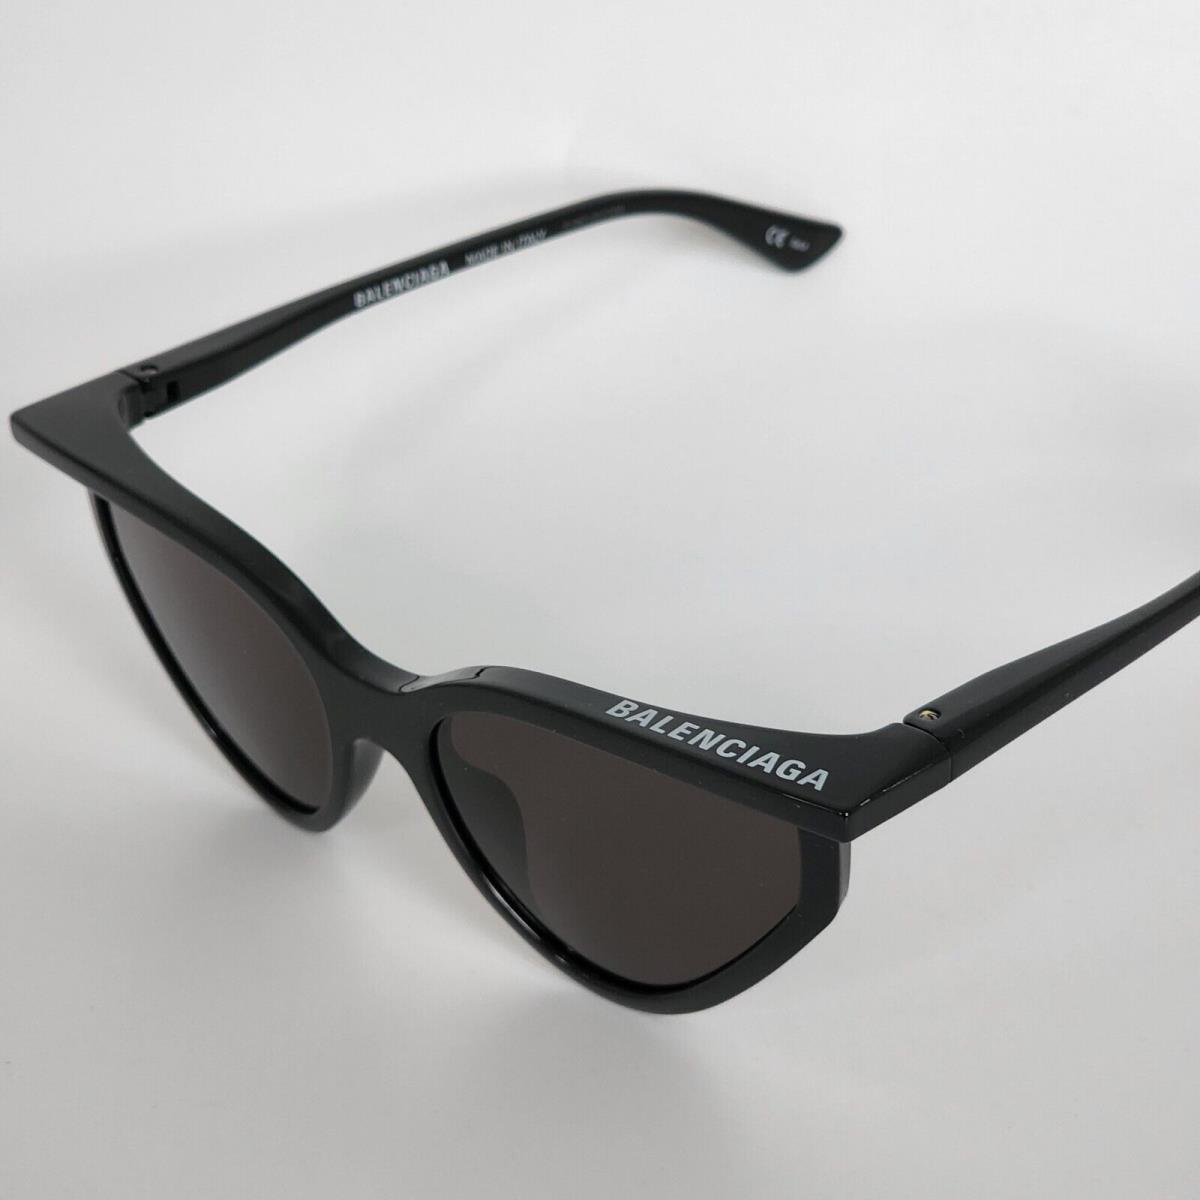 Balenciaga sunglasses  - Black Frame, Gray Lens 5